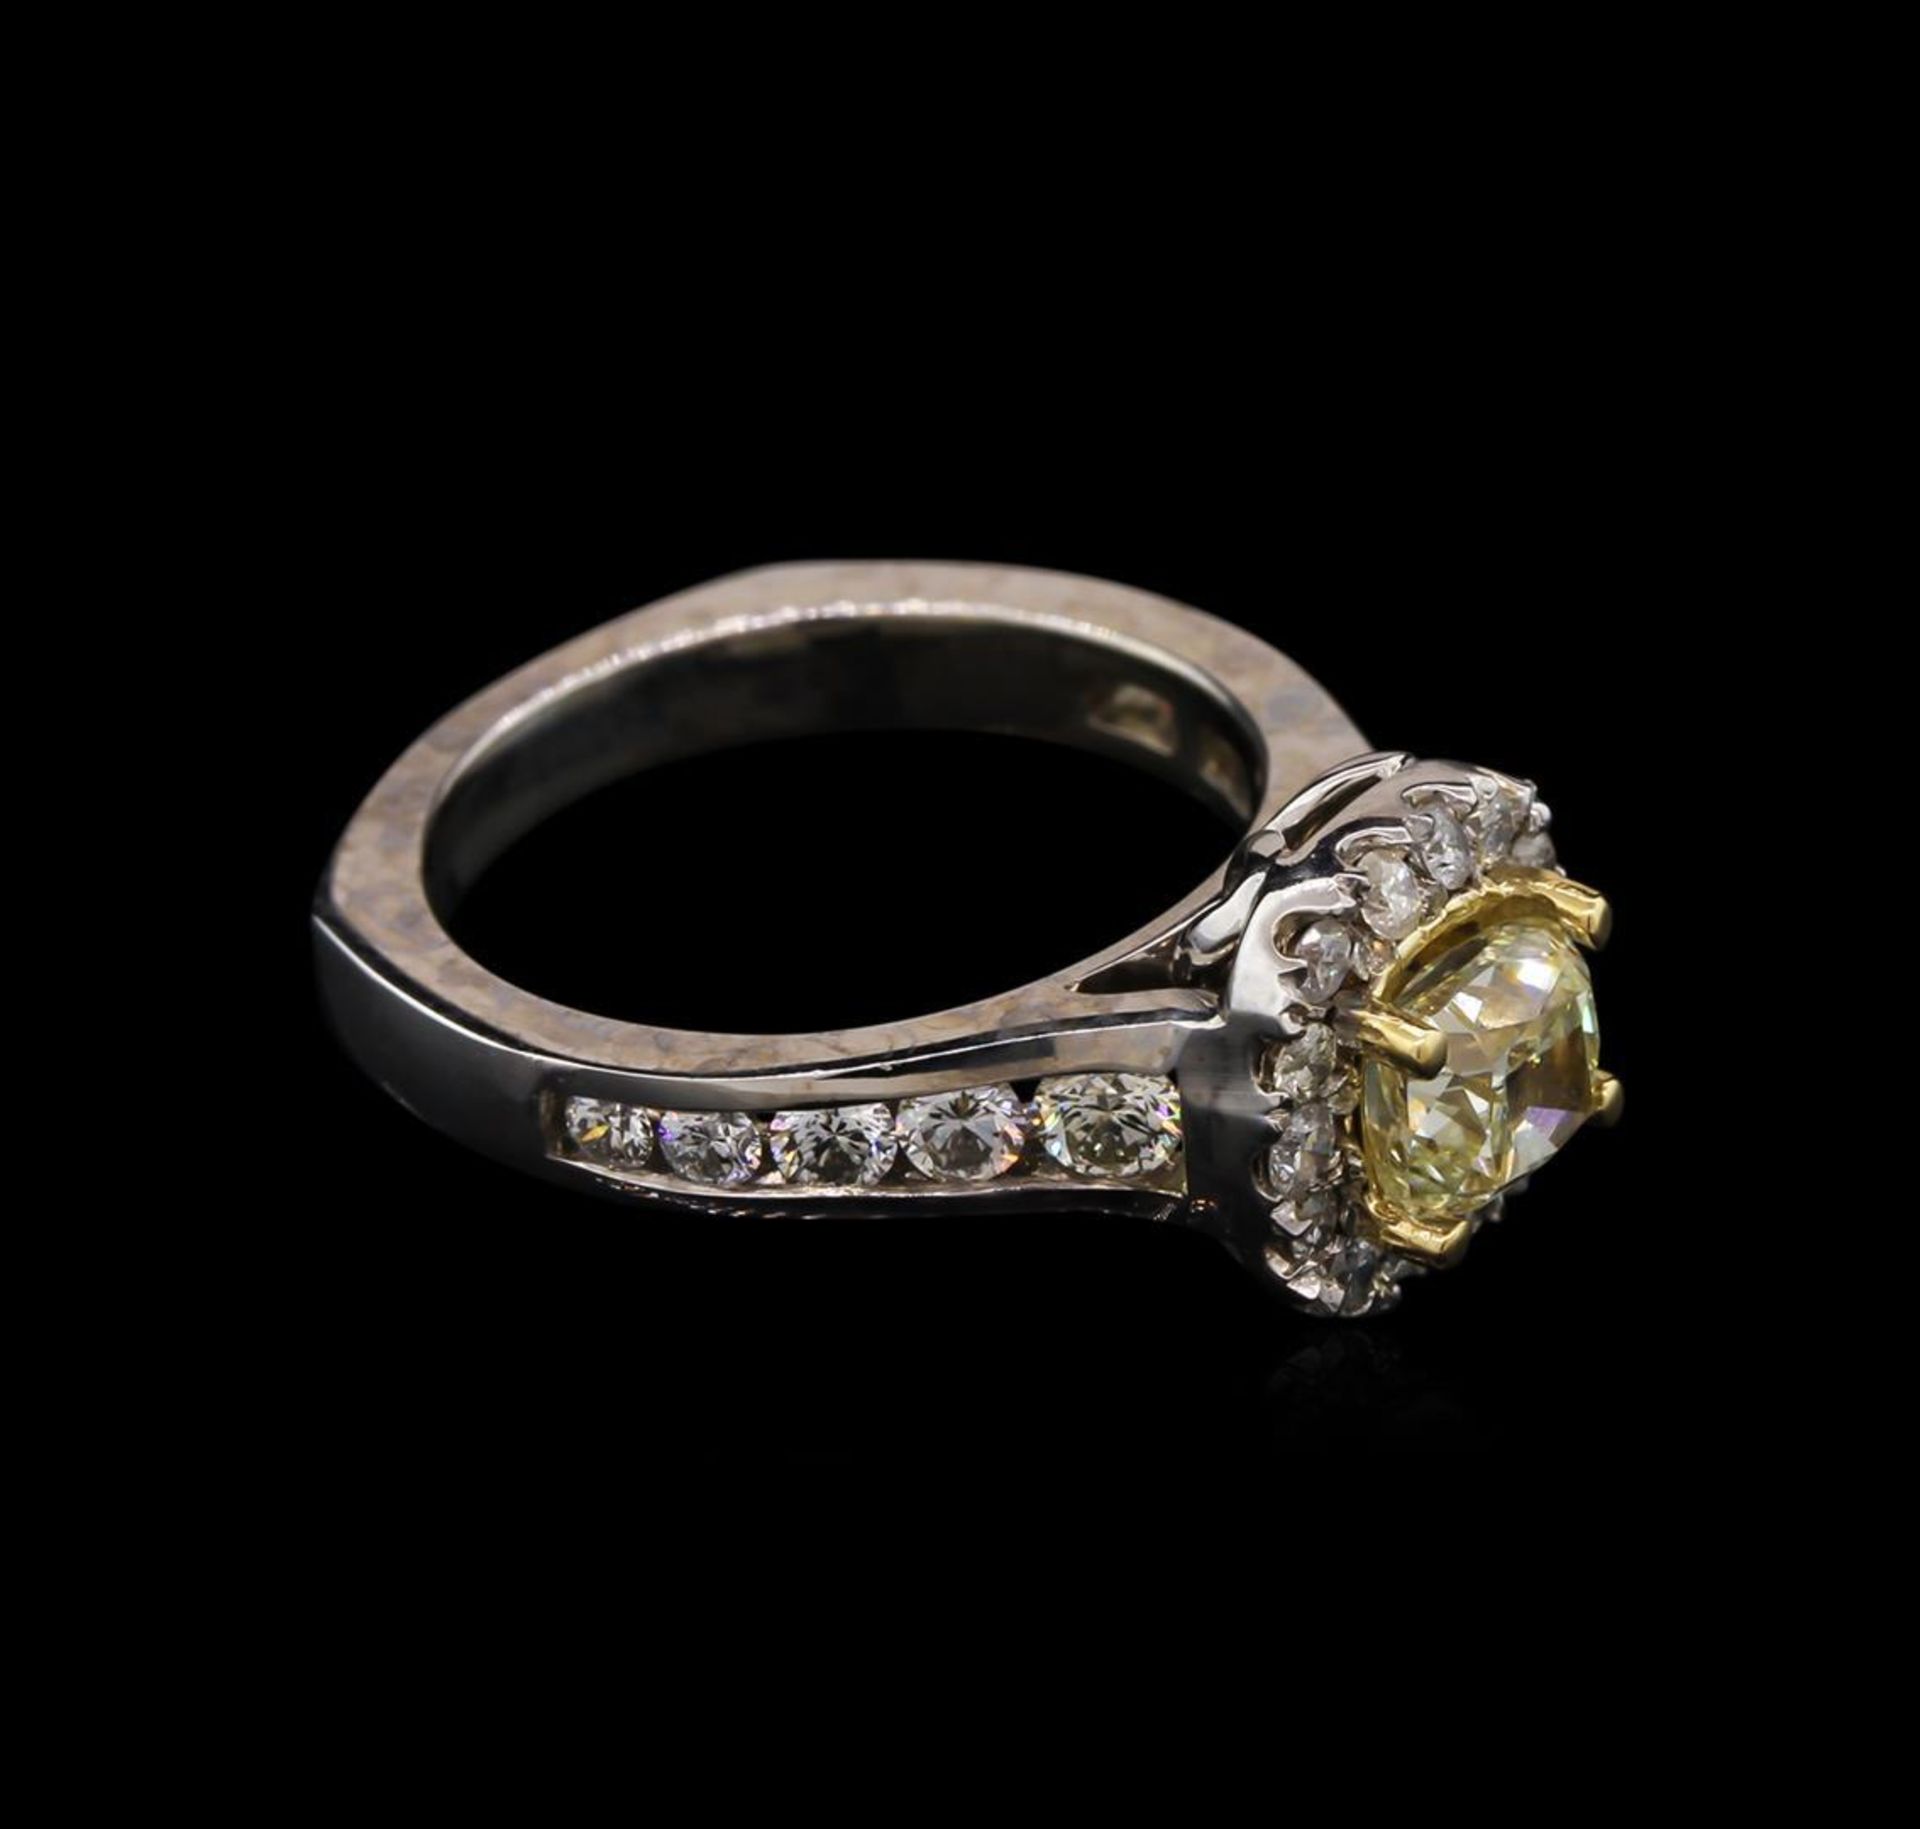 2.07 ctw Light Yellow Diamond Ring - 14KT White Gold